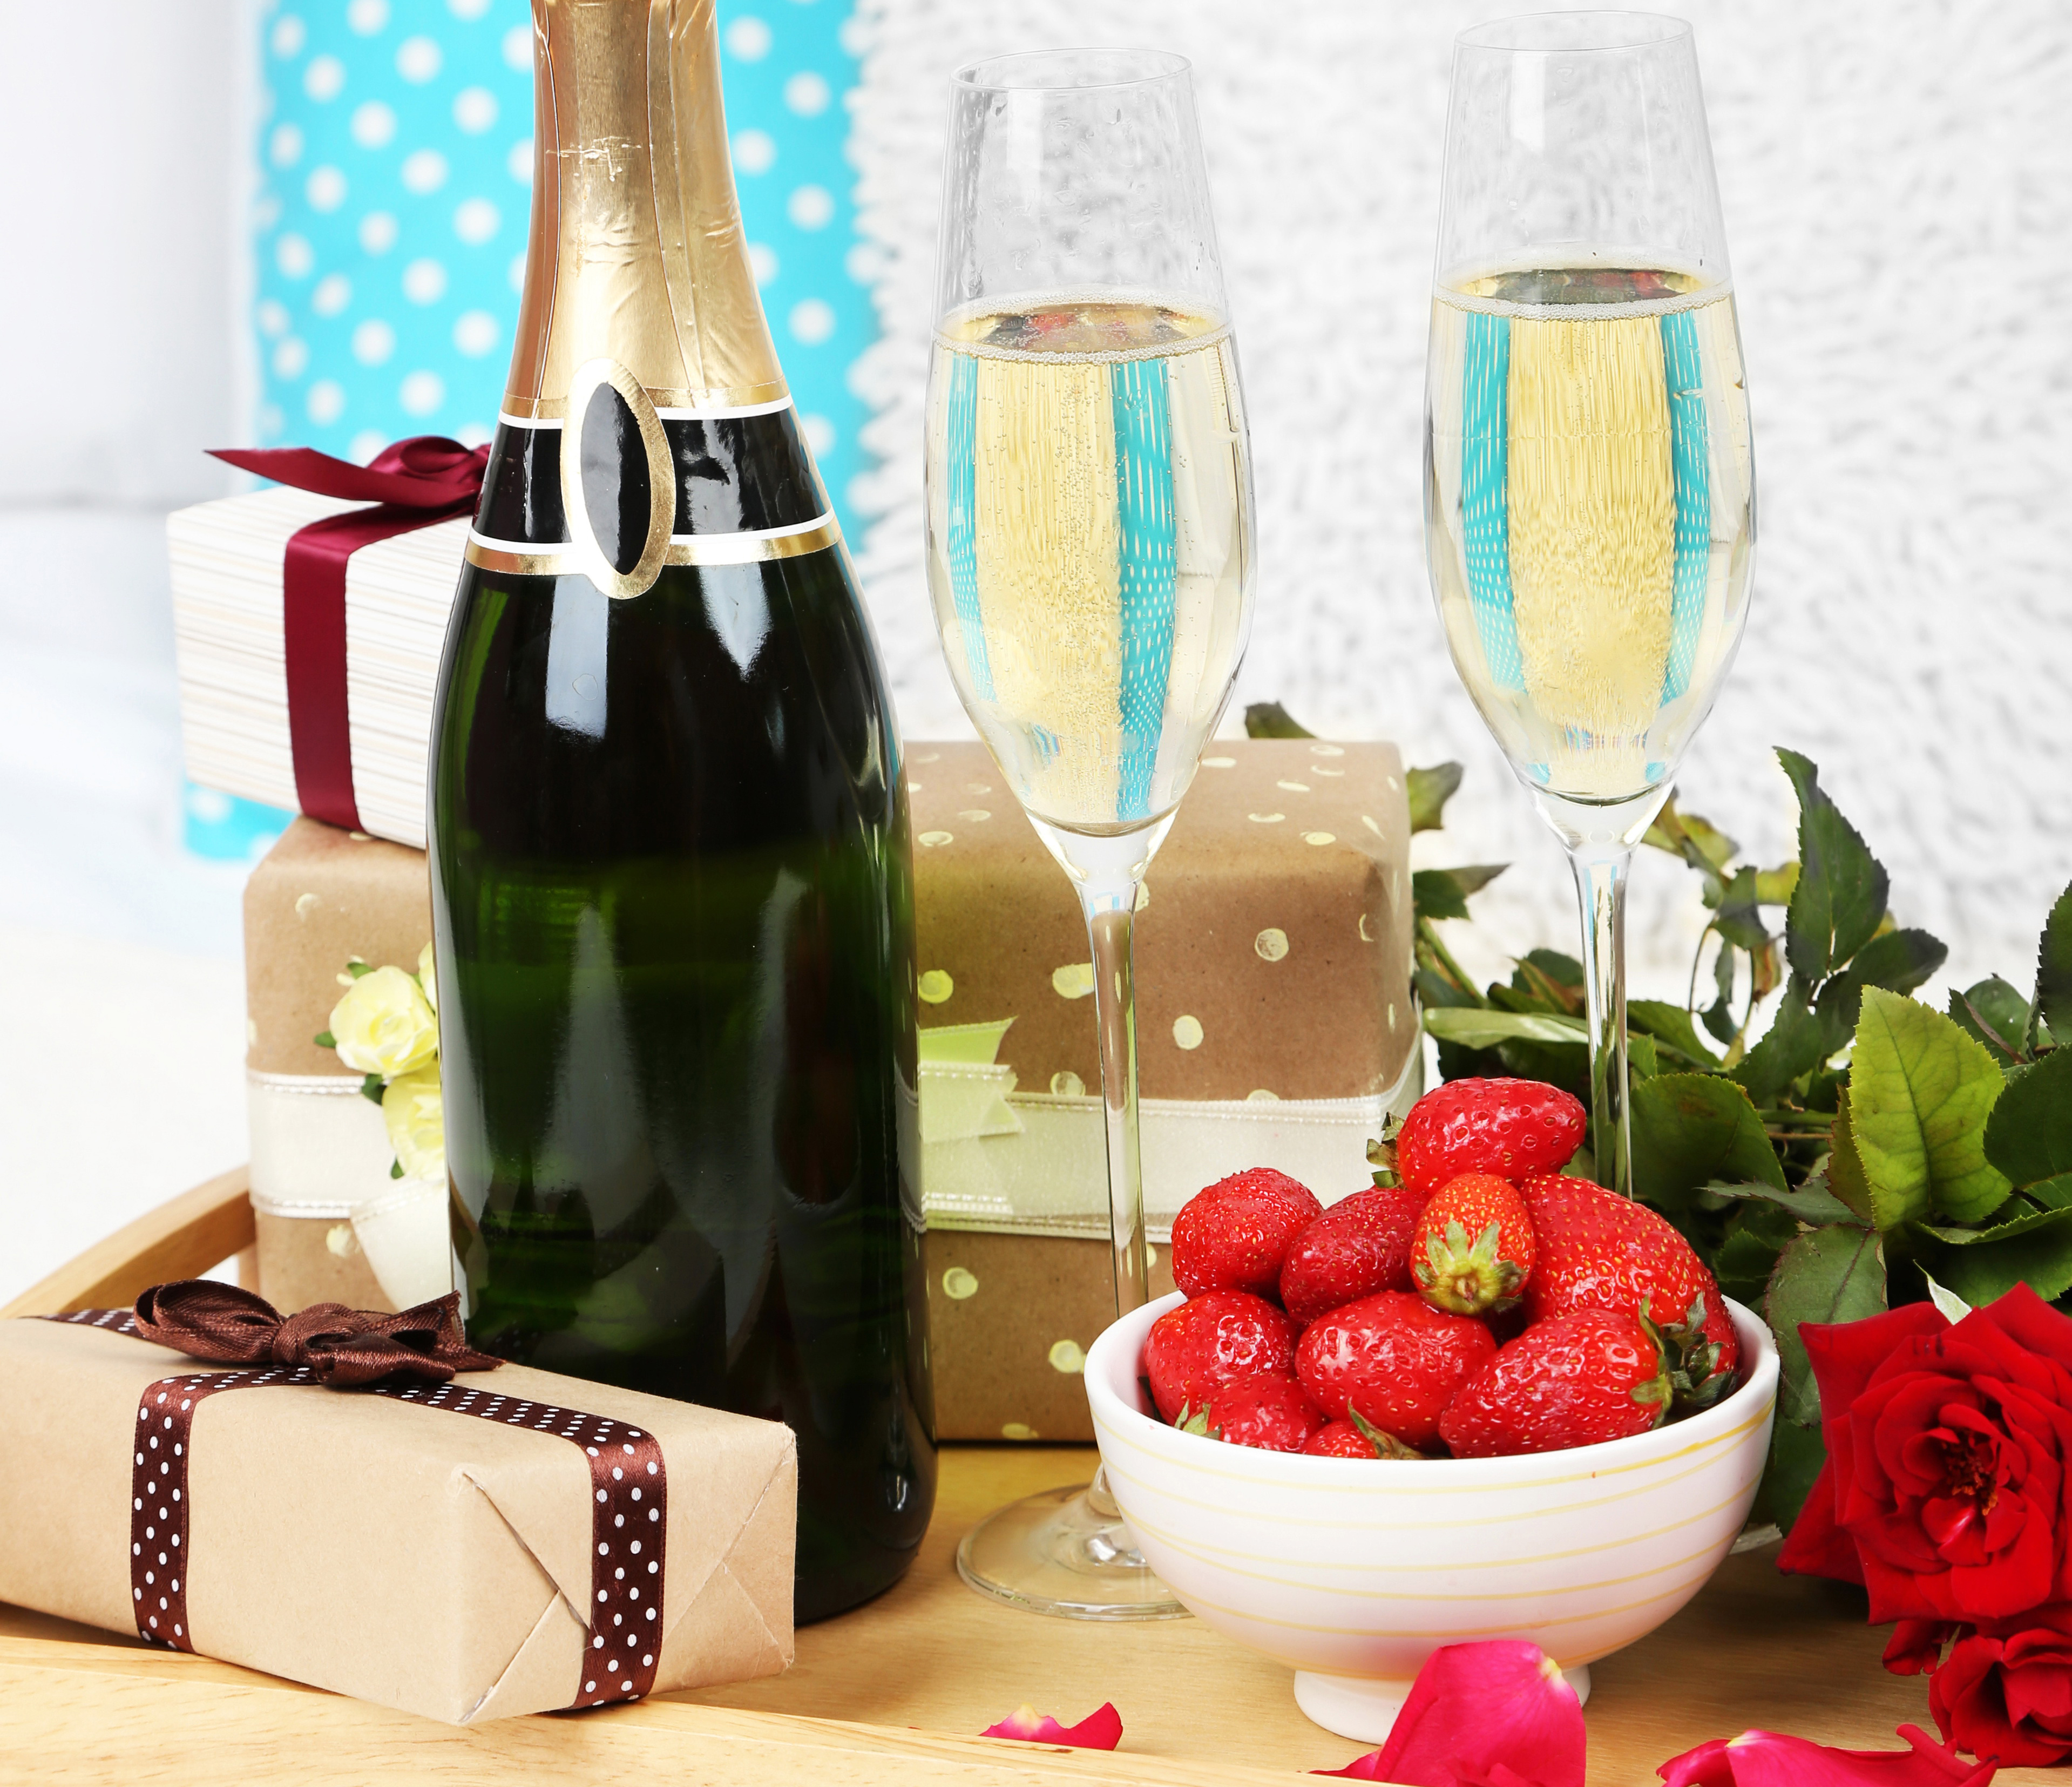 Maison strawberry champagne. Шампанское в бокале. Цветы шампанское конфеты. Торт шампанское цветы. Шампанское и фрукты.